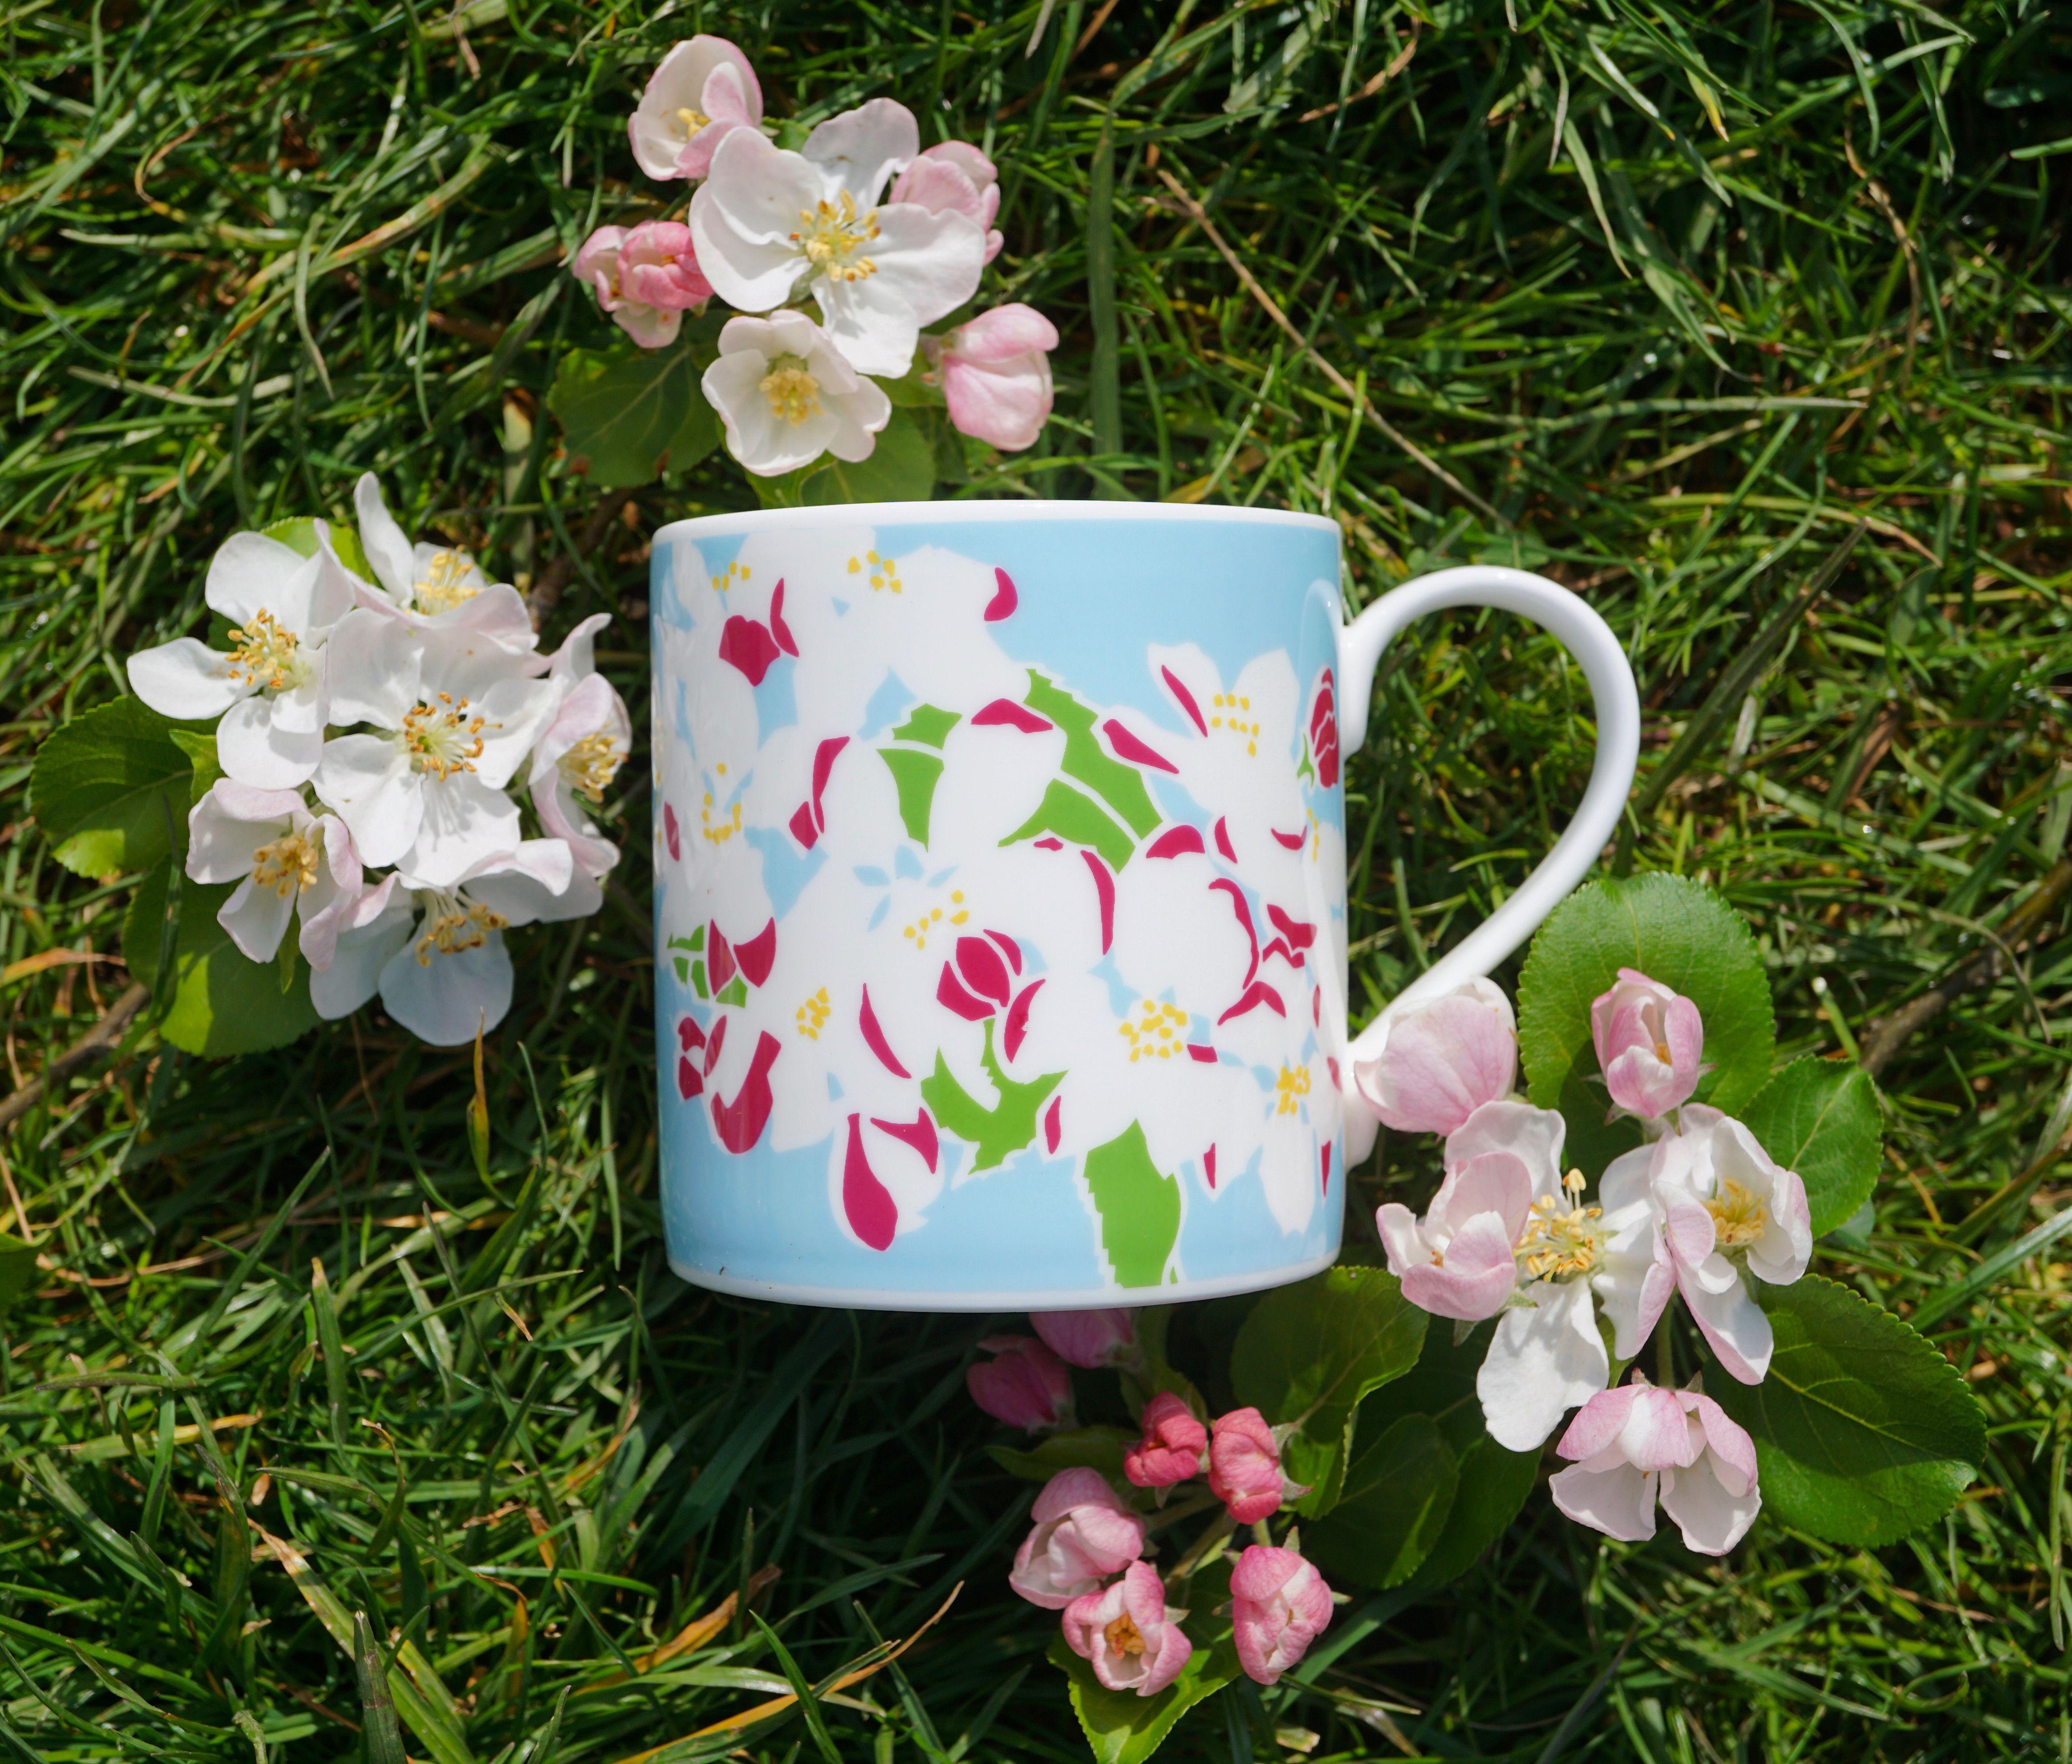 'Apple blossom' fine bone china mug made in England